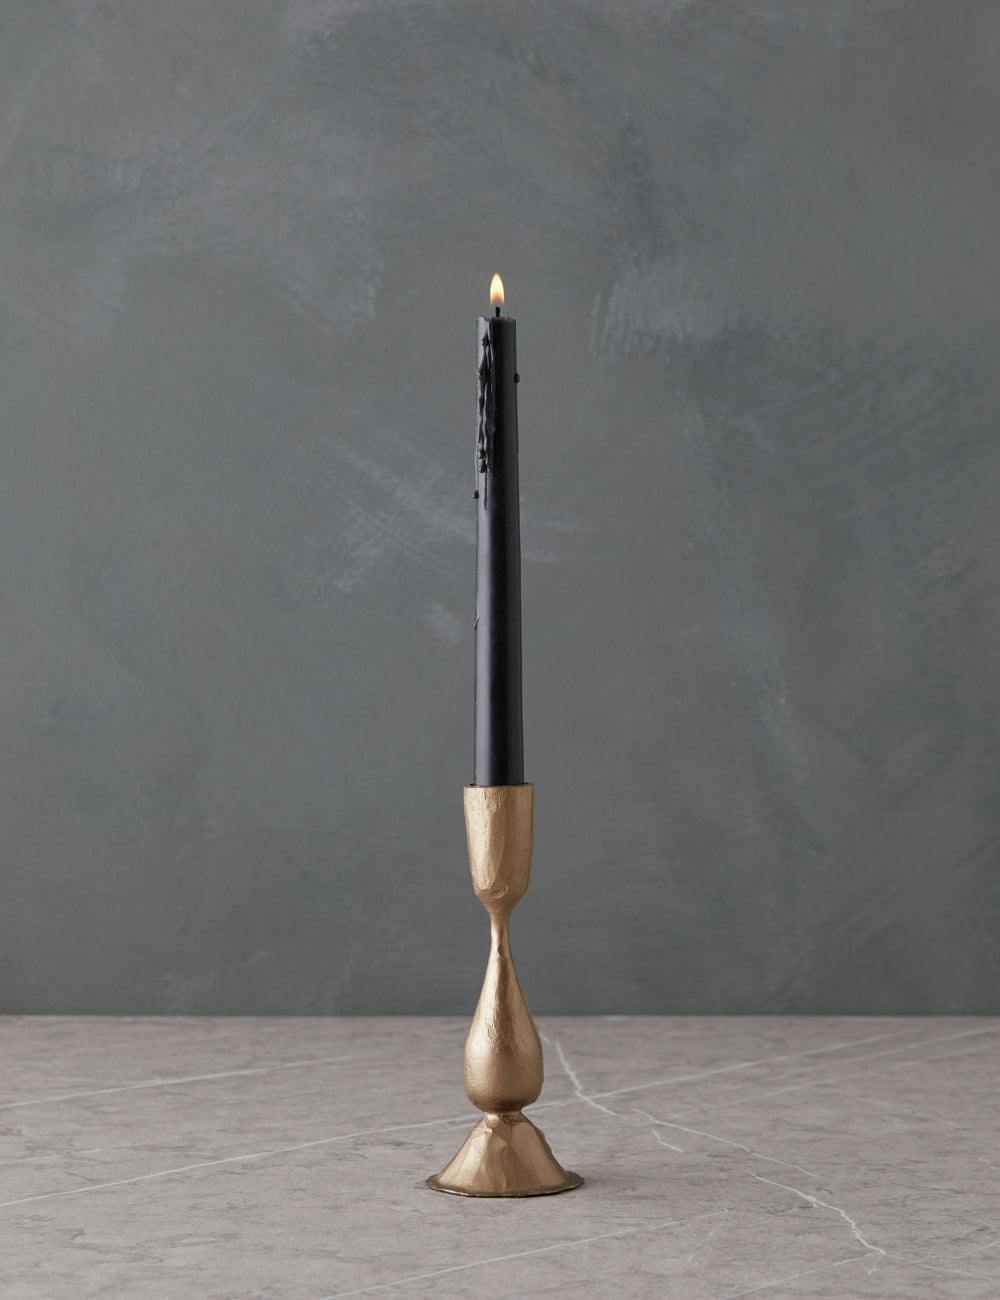 Elegant Hand-Forged Antique Brass Taper Candle Holder